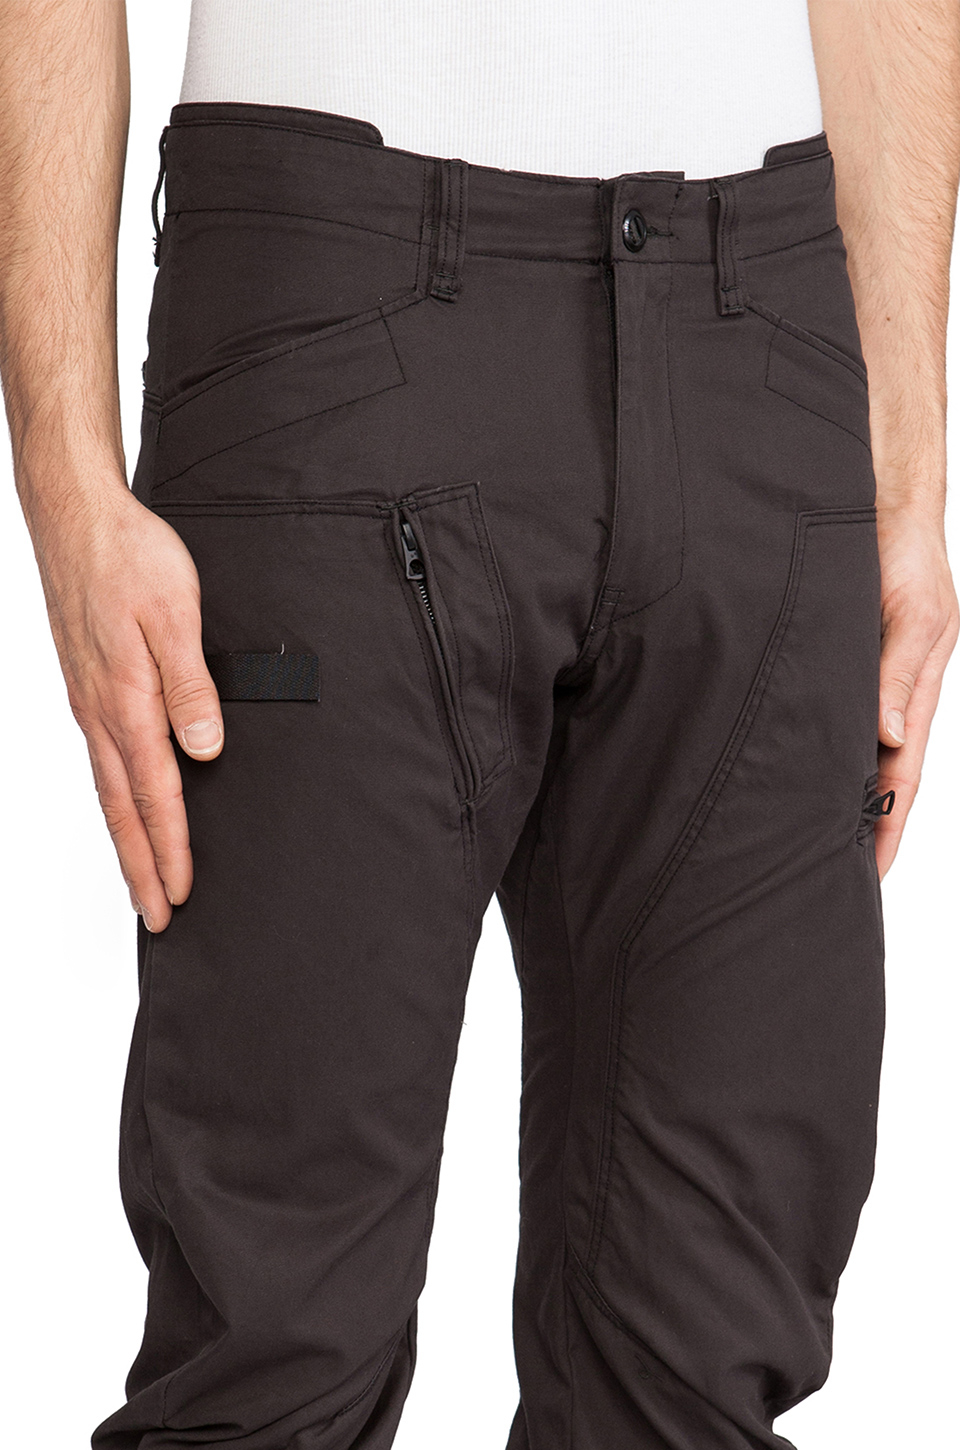 powel 3d tapered pants Off 66% - www.loverethymno.com